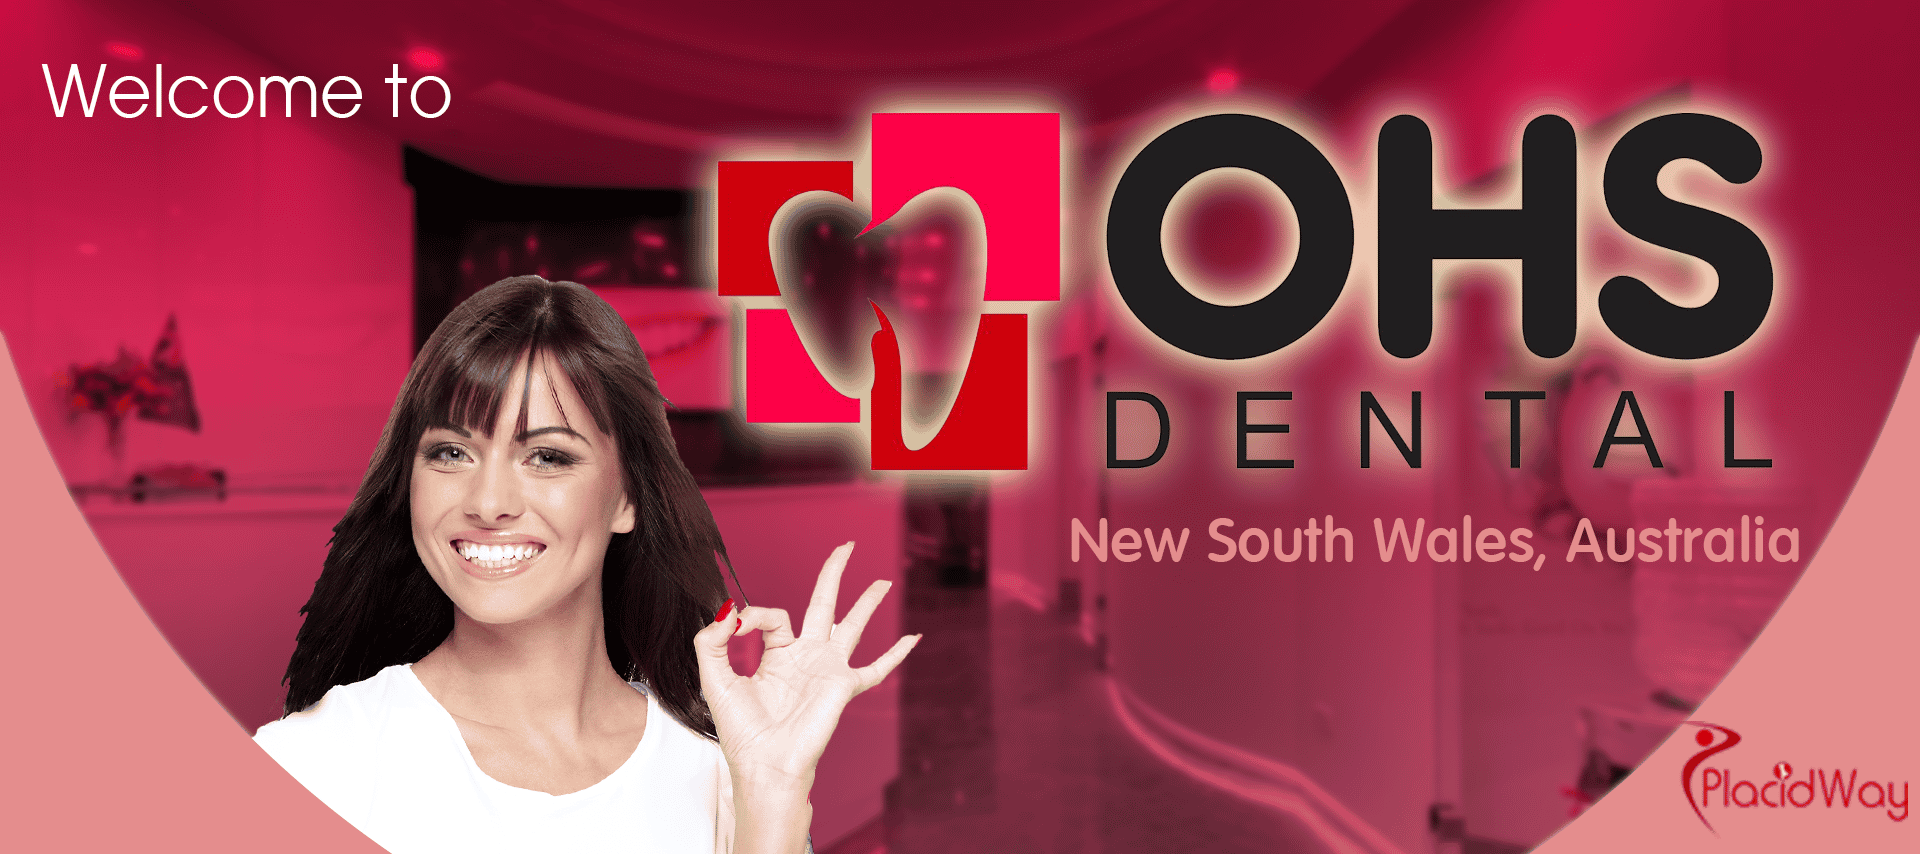 OHS Dental – Premier Dental Clinic in Lugarno Sydney, New South Wales